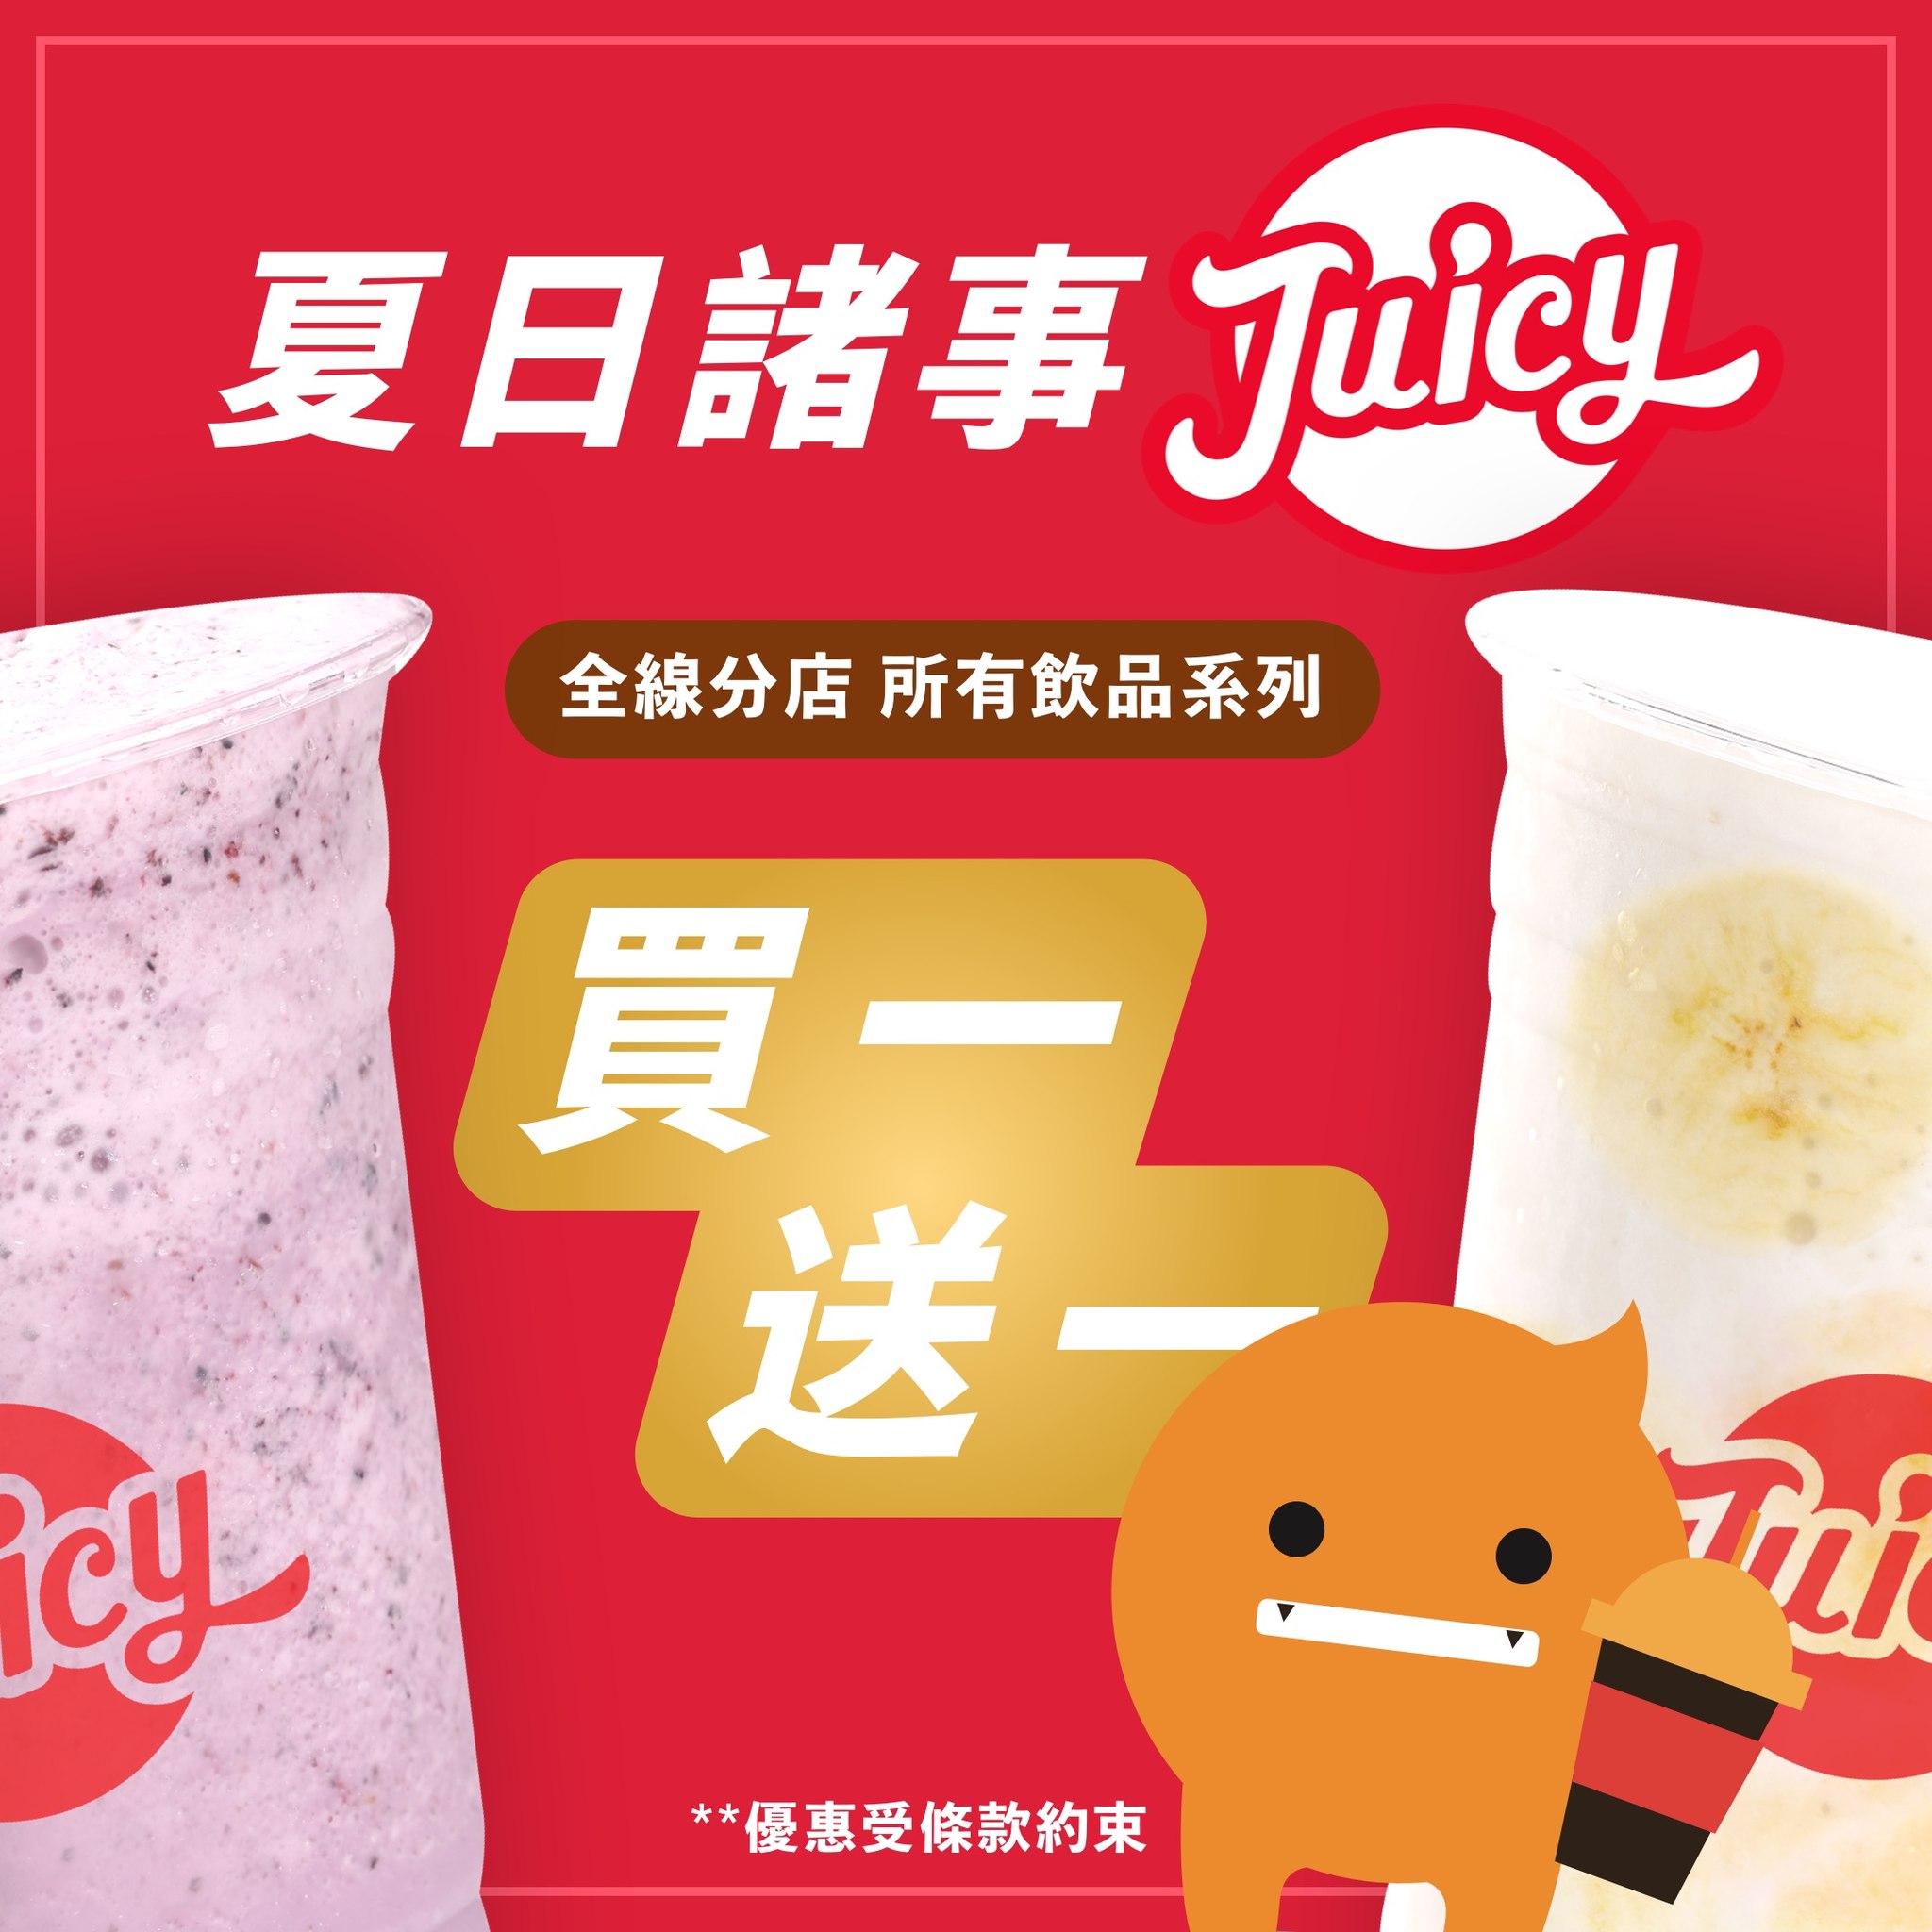 JuicyHK｜慶祝旺角店開幕，全線Juicy飲品買一送一